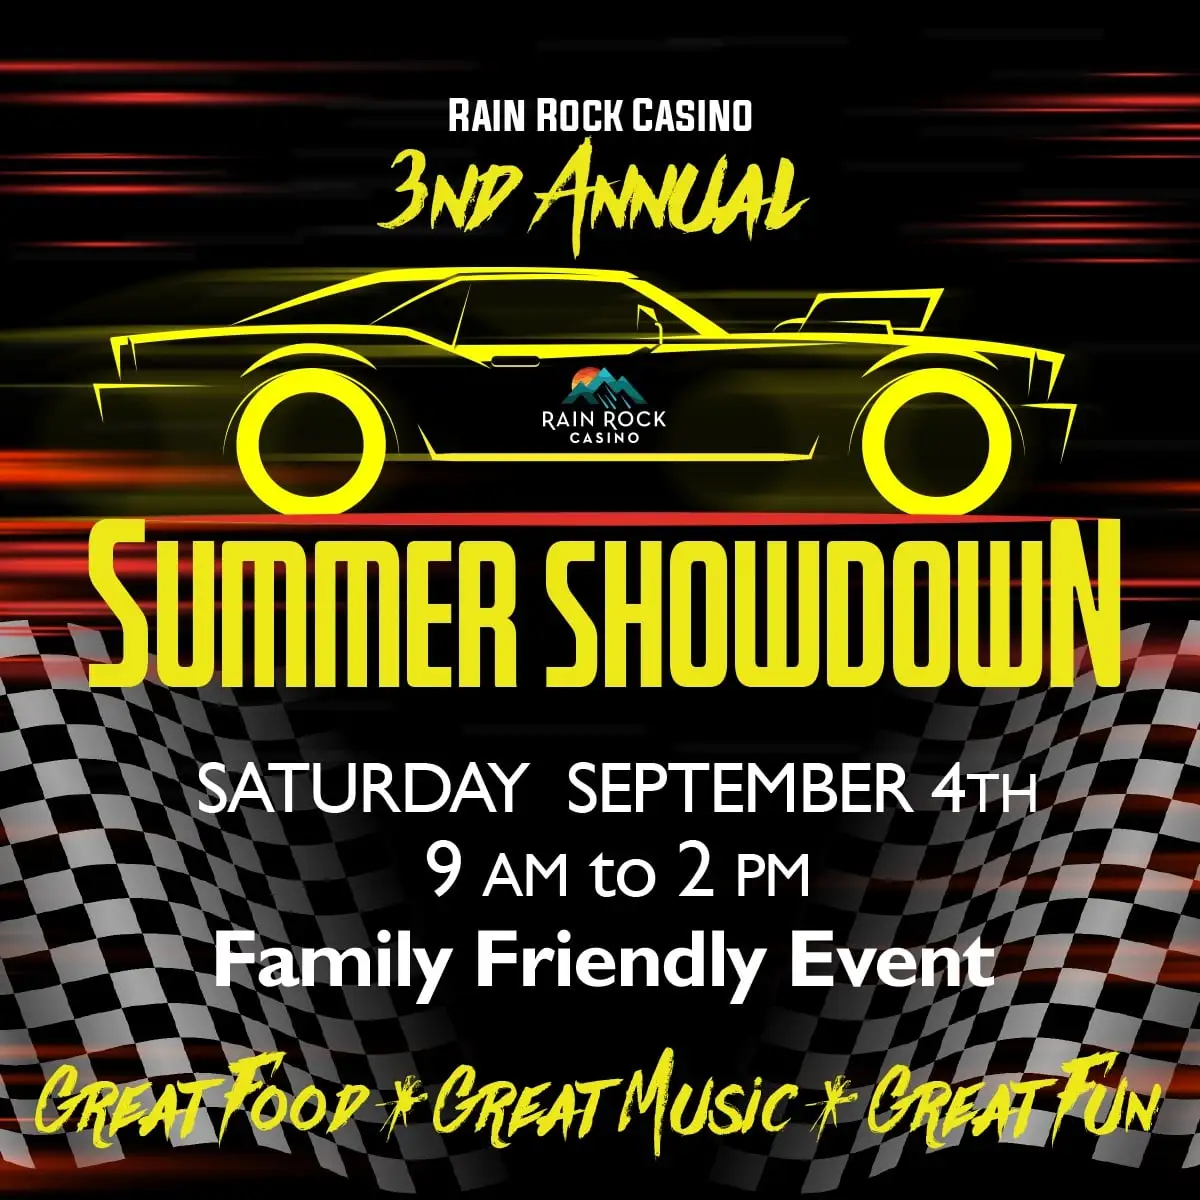 Rain Rock Casino's Summer Showdown Car Show